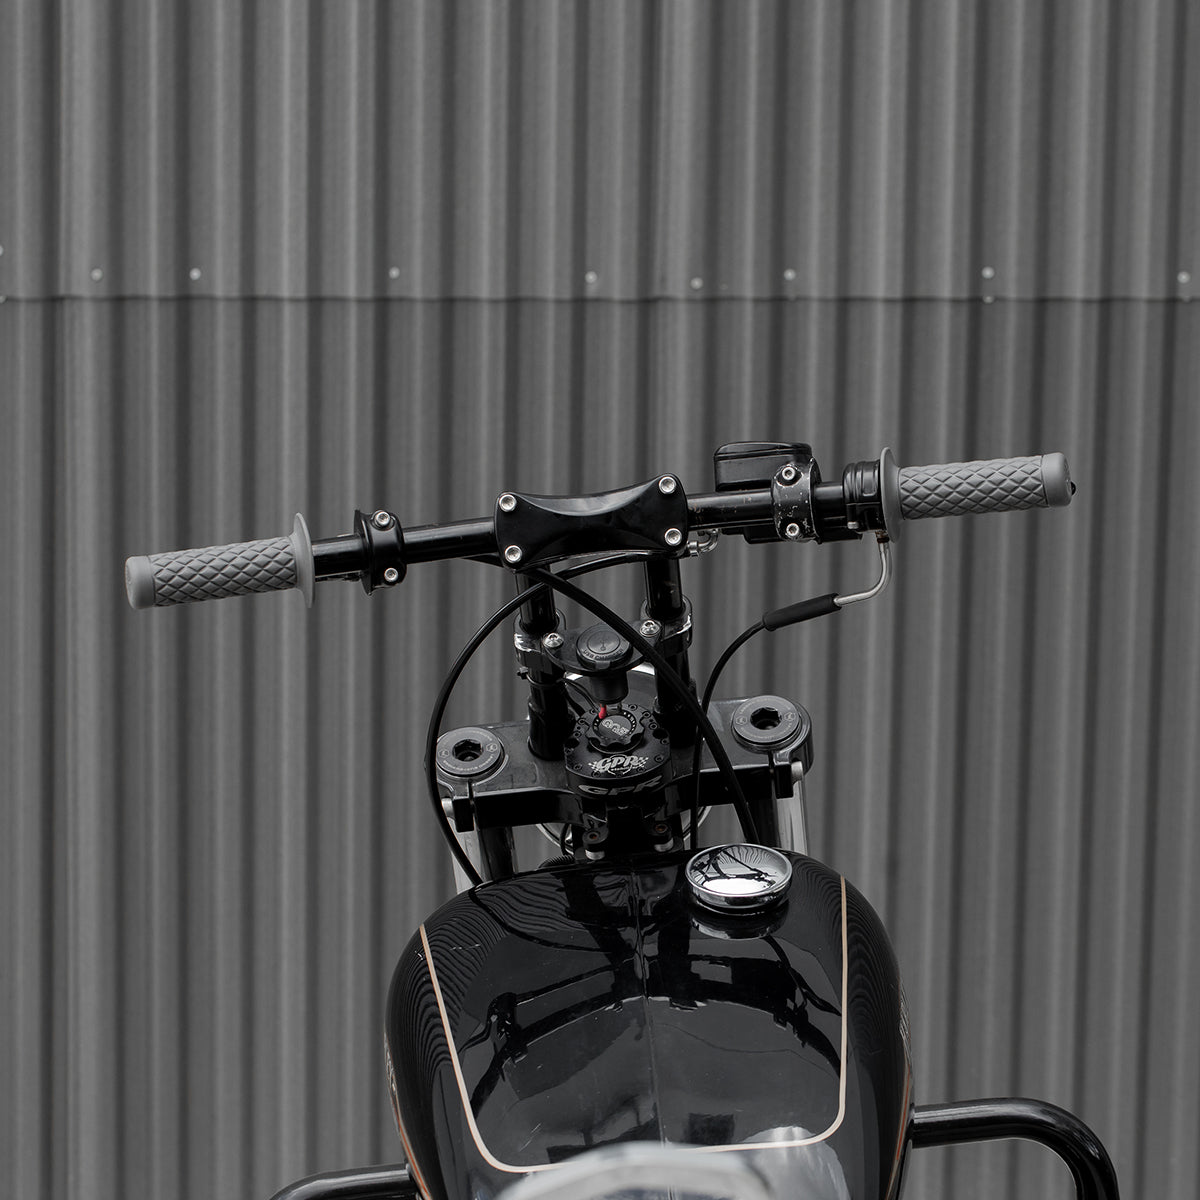 Poignée moto classic vintage, moto-scrambler